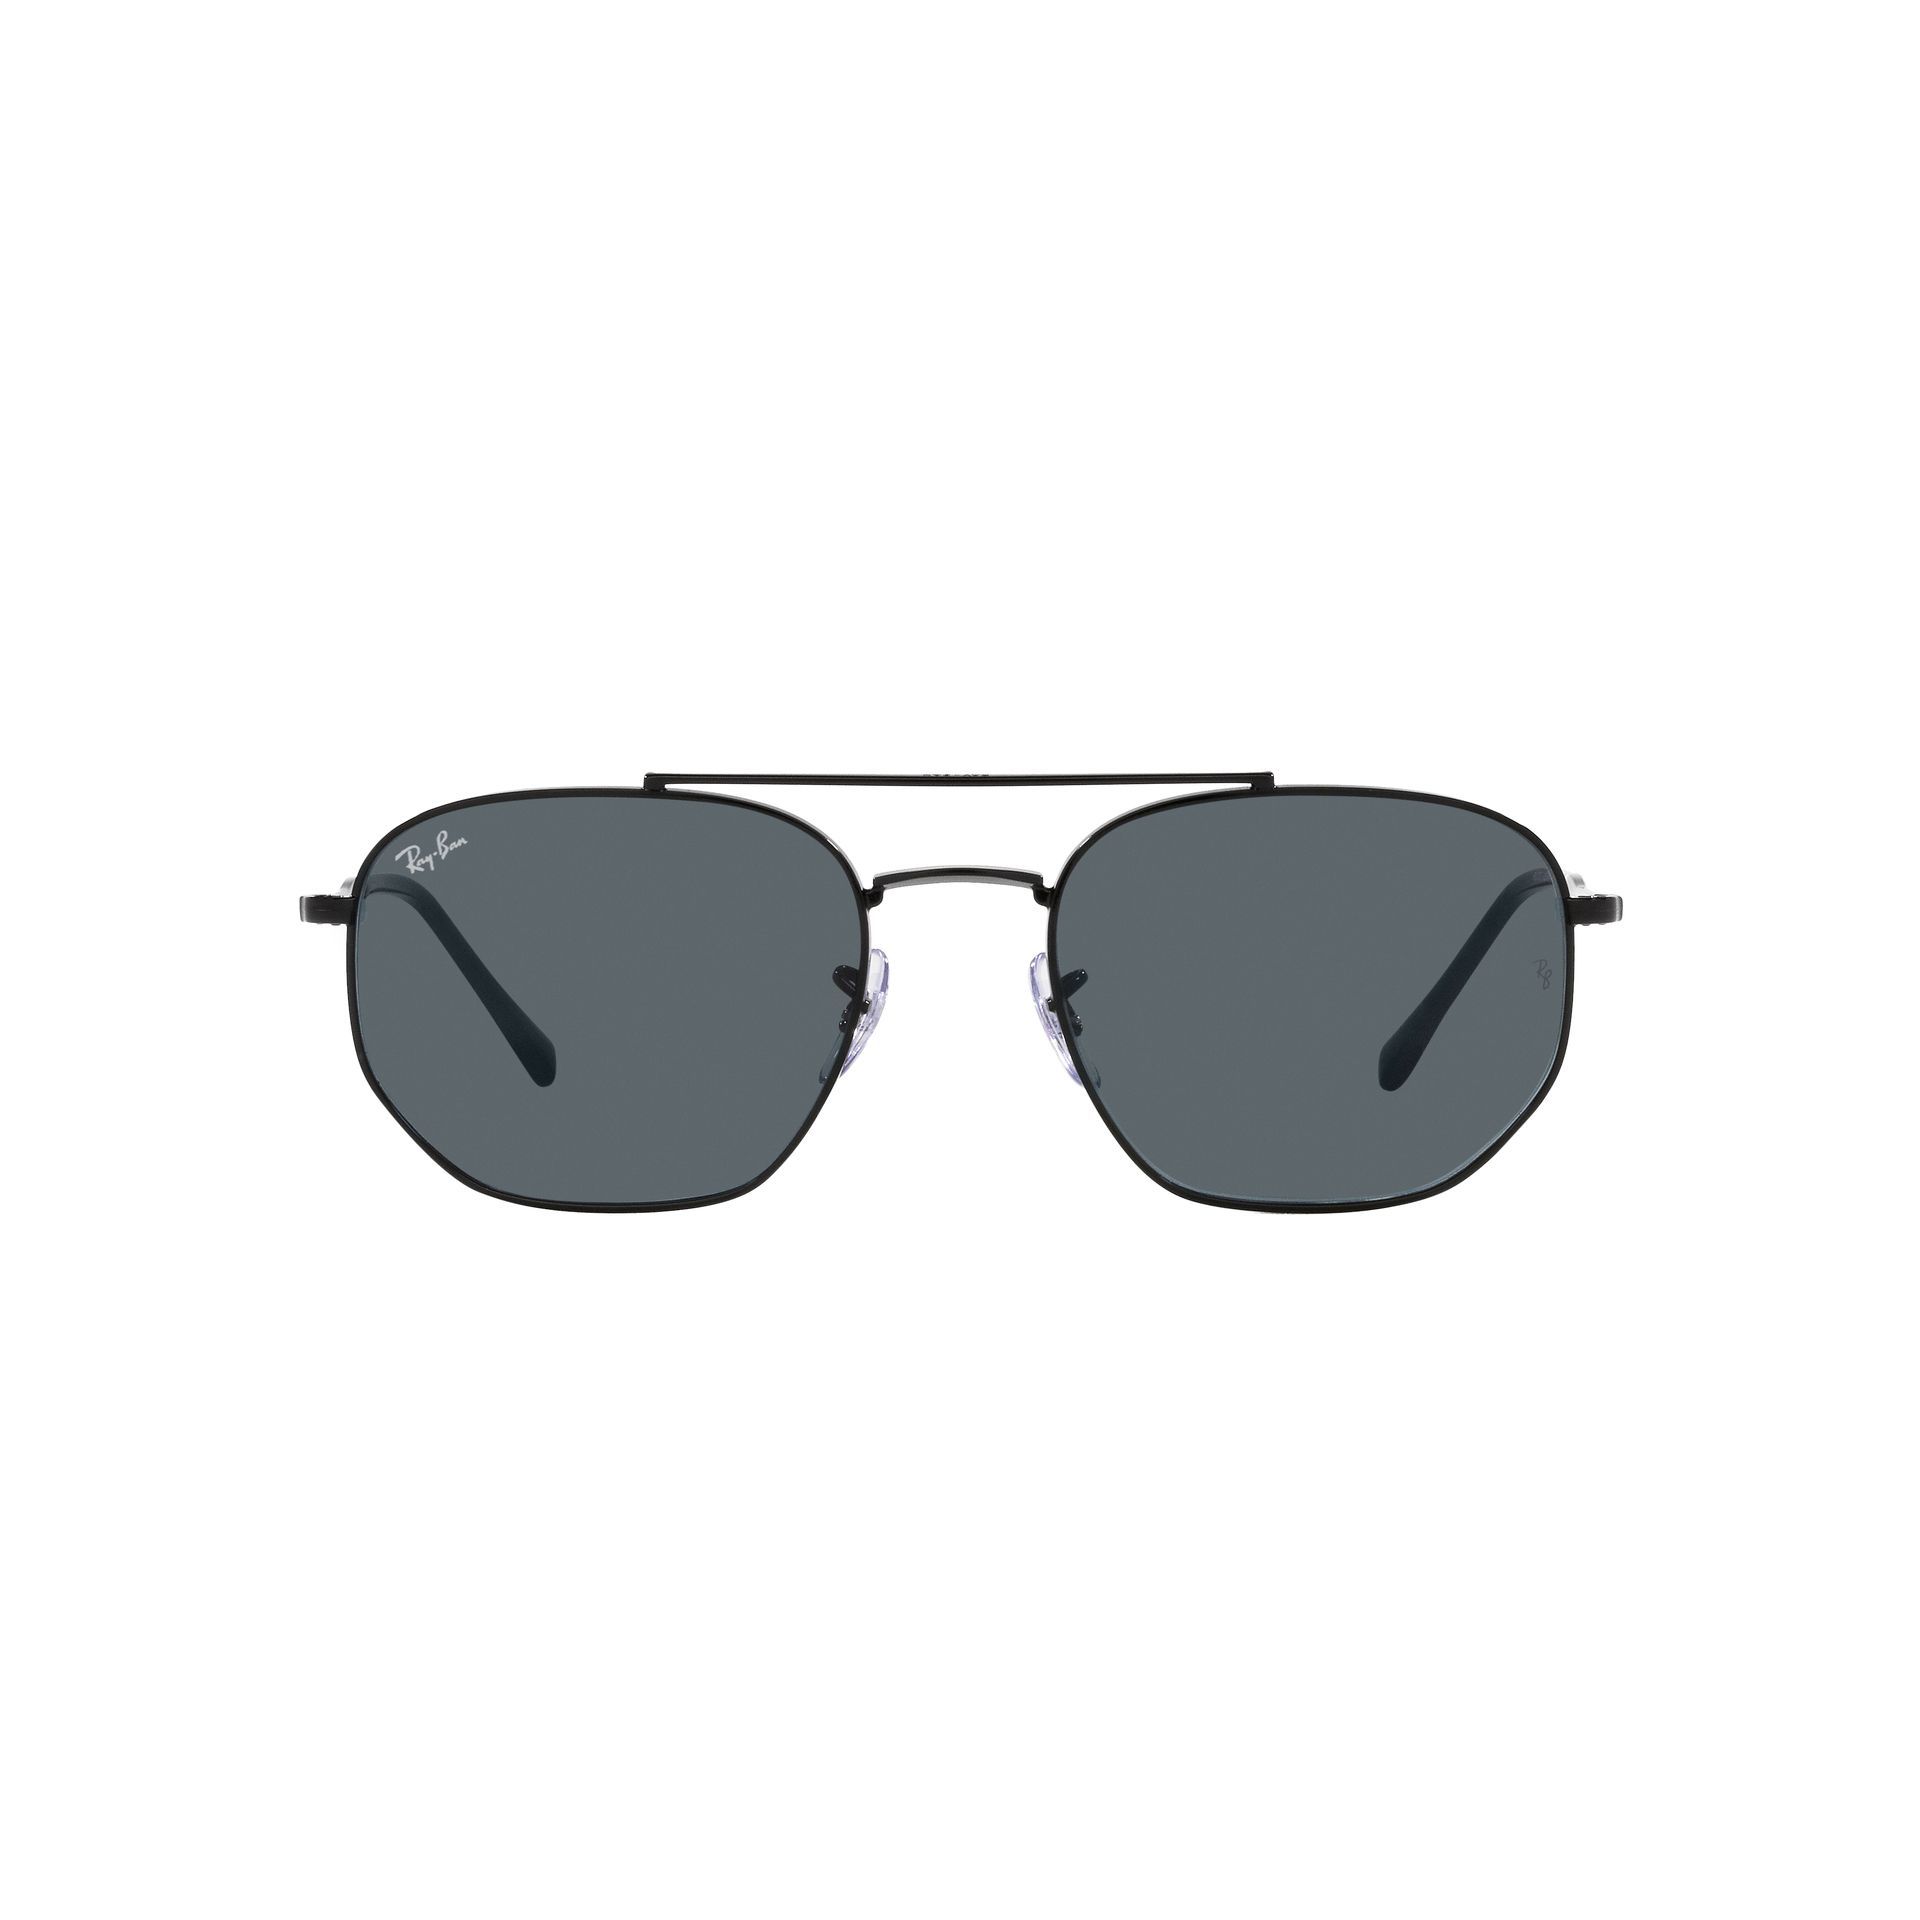 0RB3707 Irregular Sunglasses 9257R5 - size 54